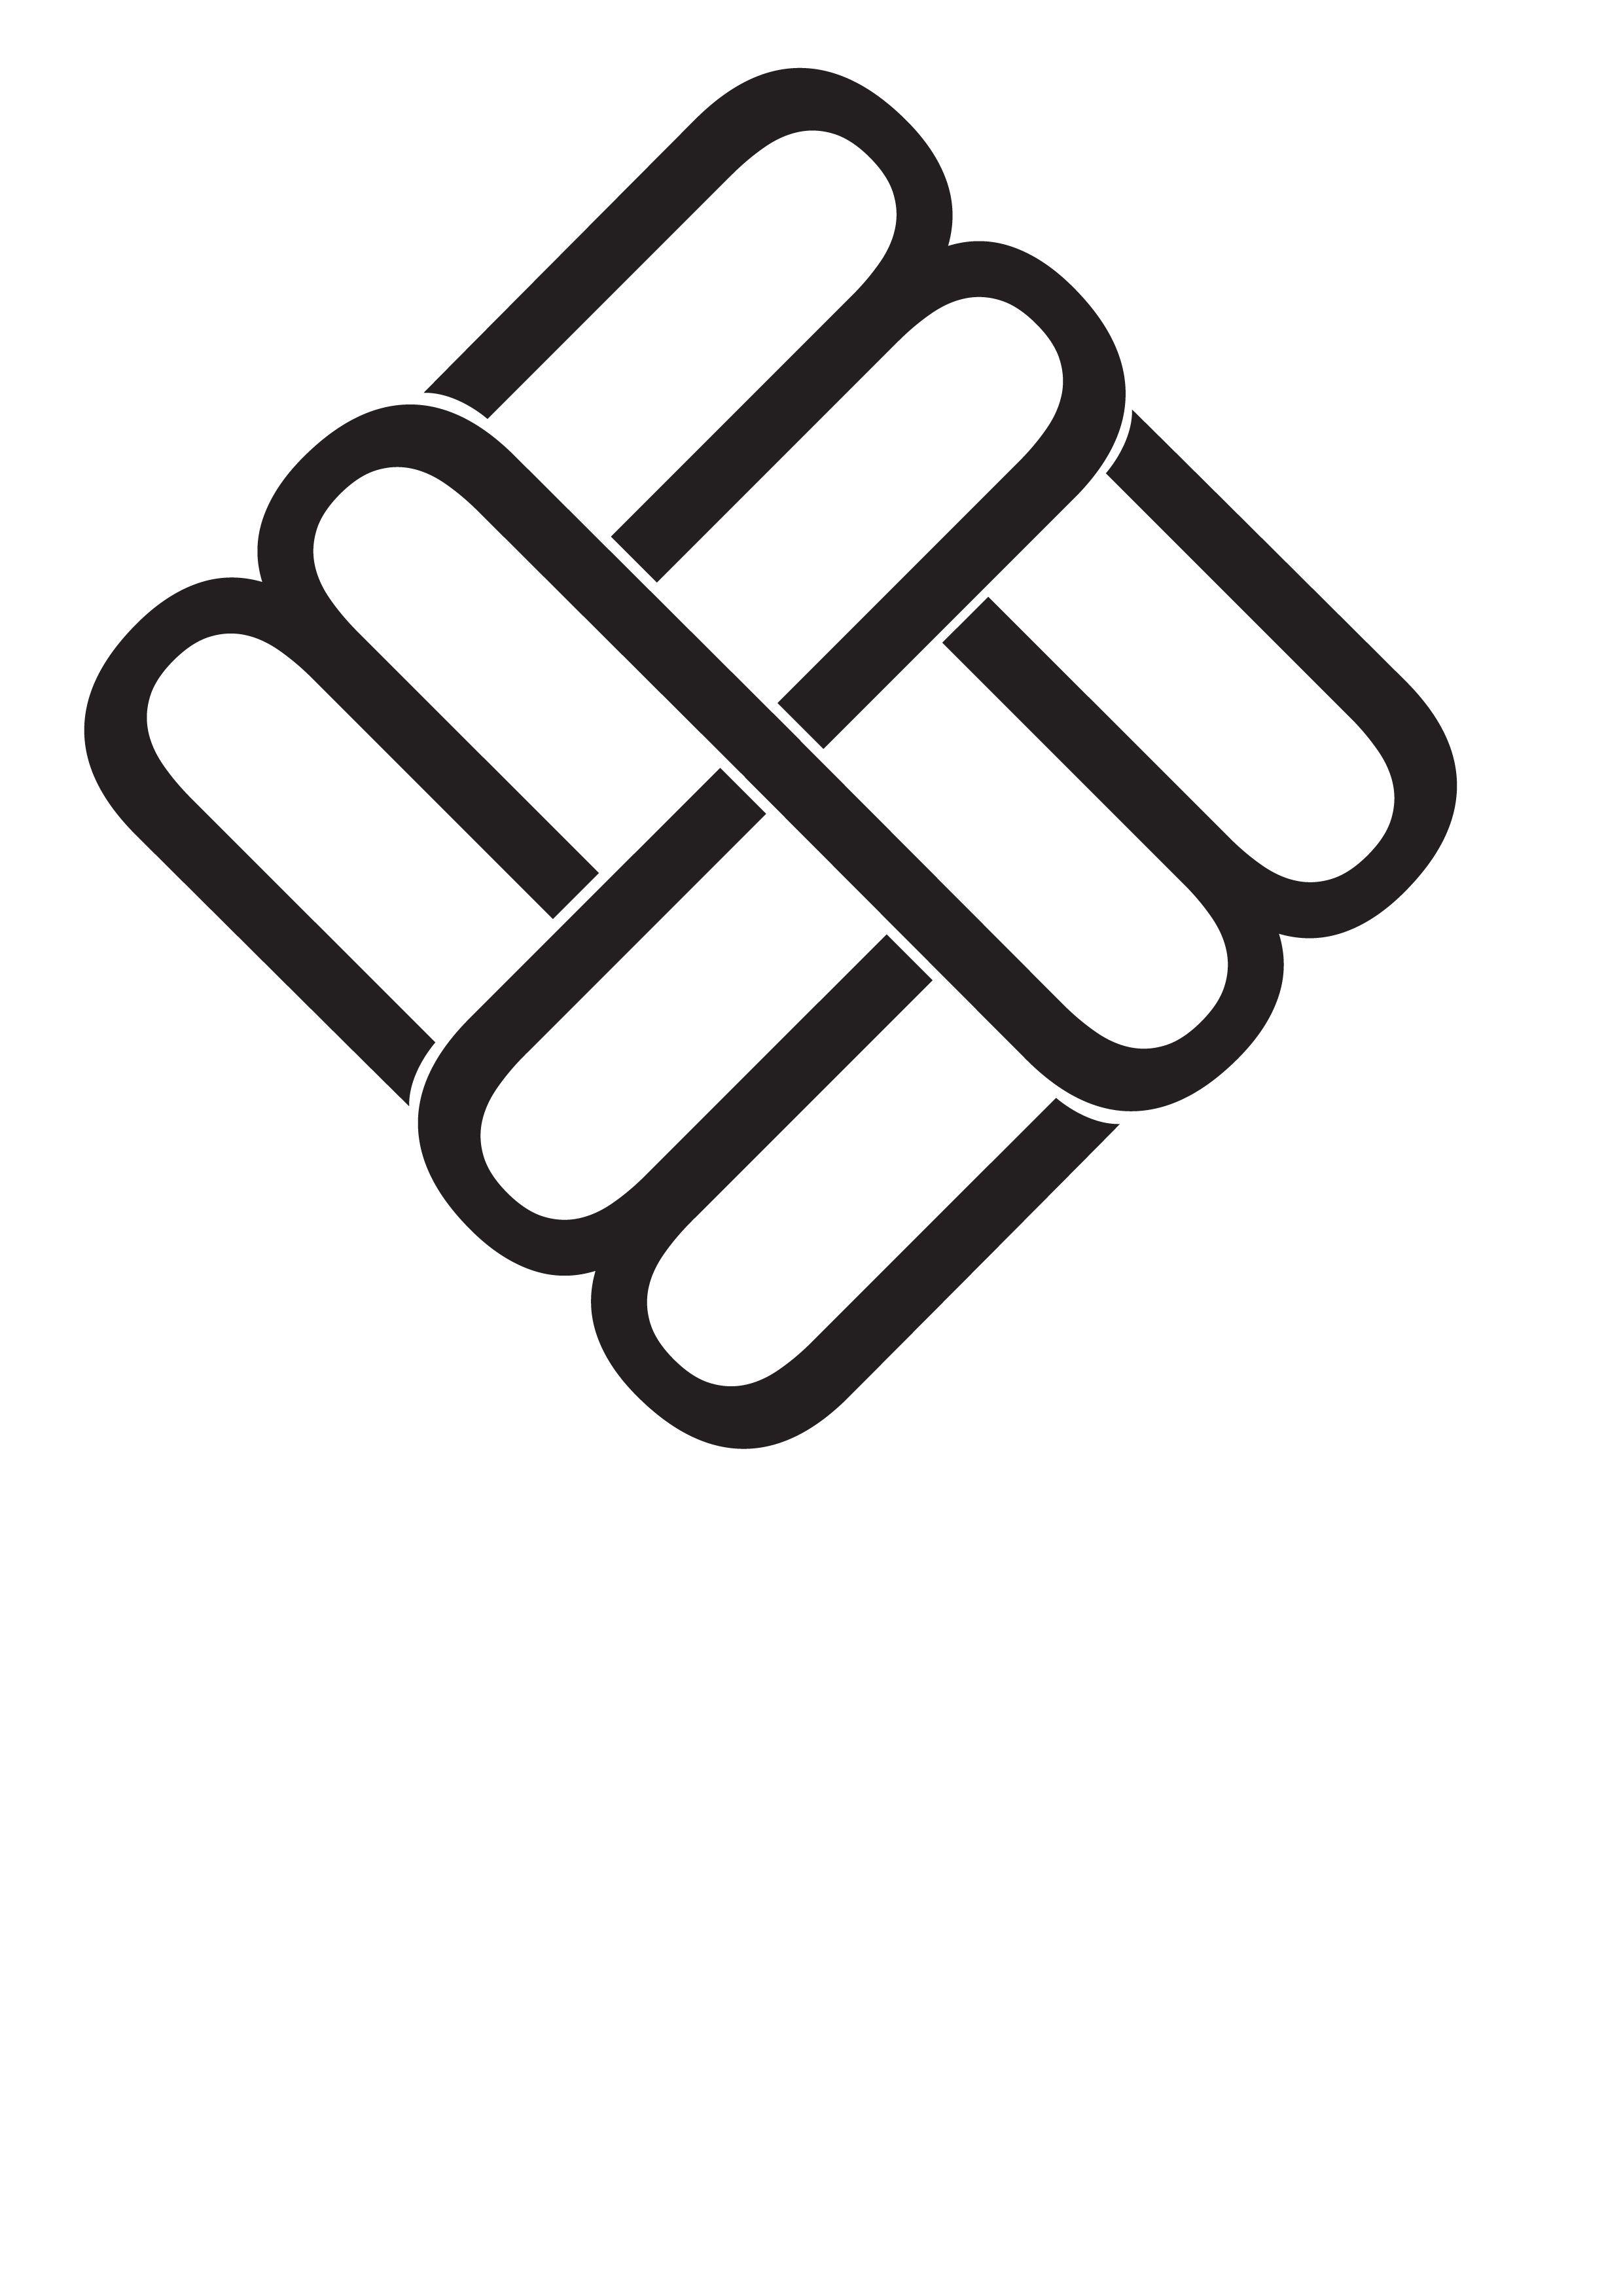 MB Logo - mb logo - Google Search | DesignSpiration